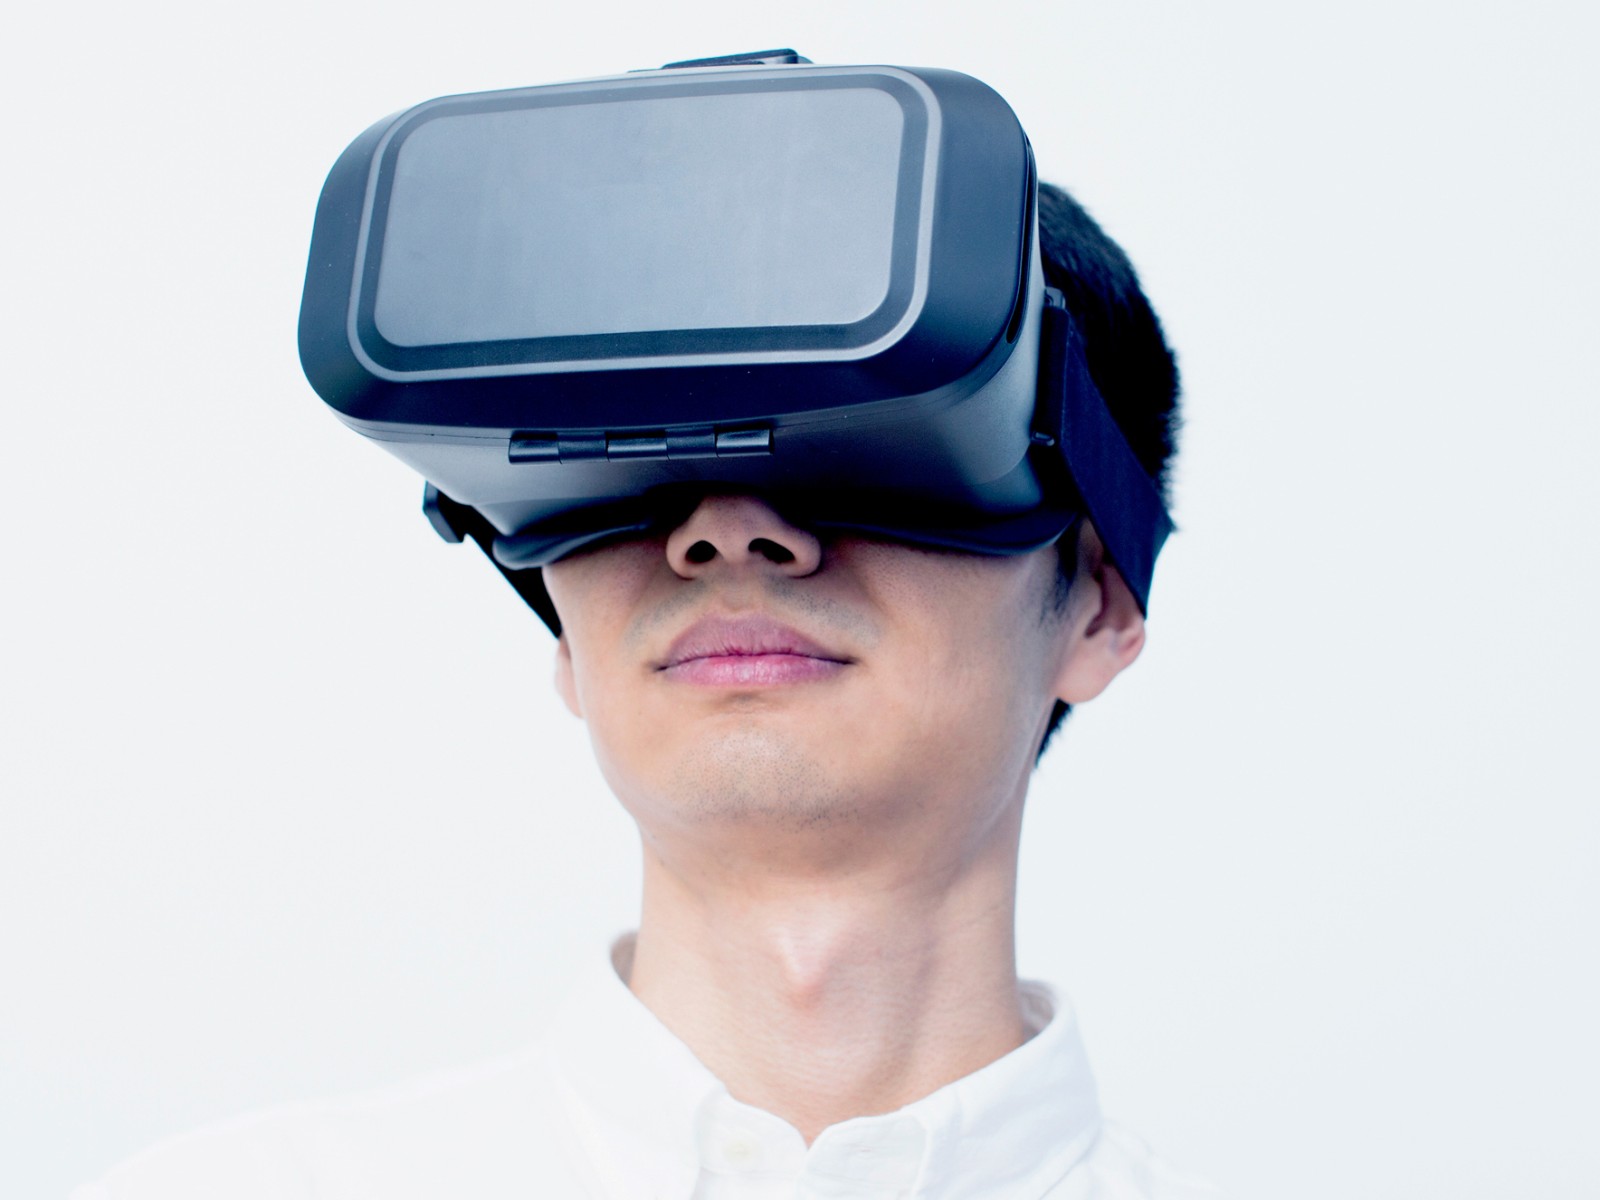 Re vr. VR 61. VR очки на человеке. VR Glasses робот. Виртуальная реальность фон.